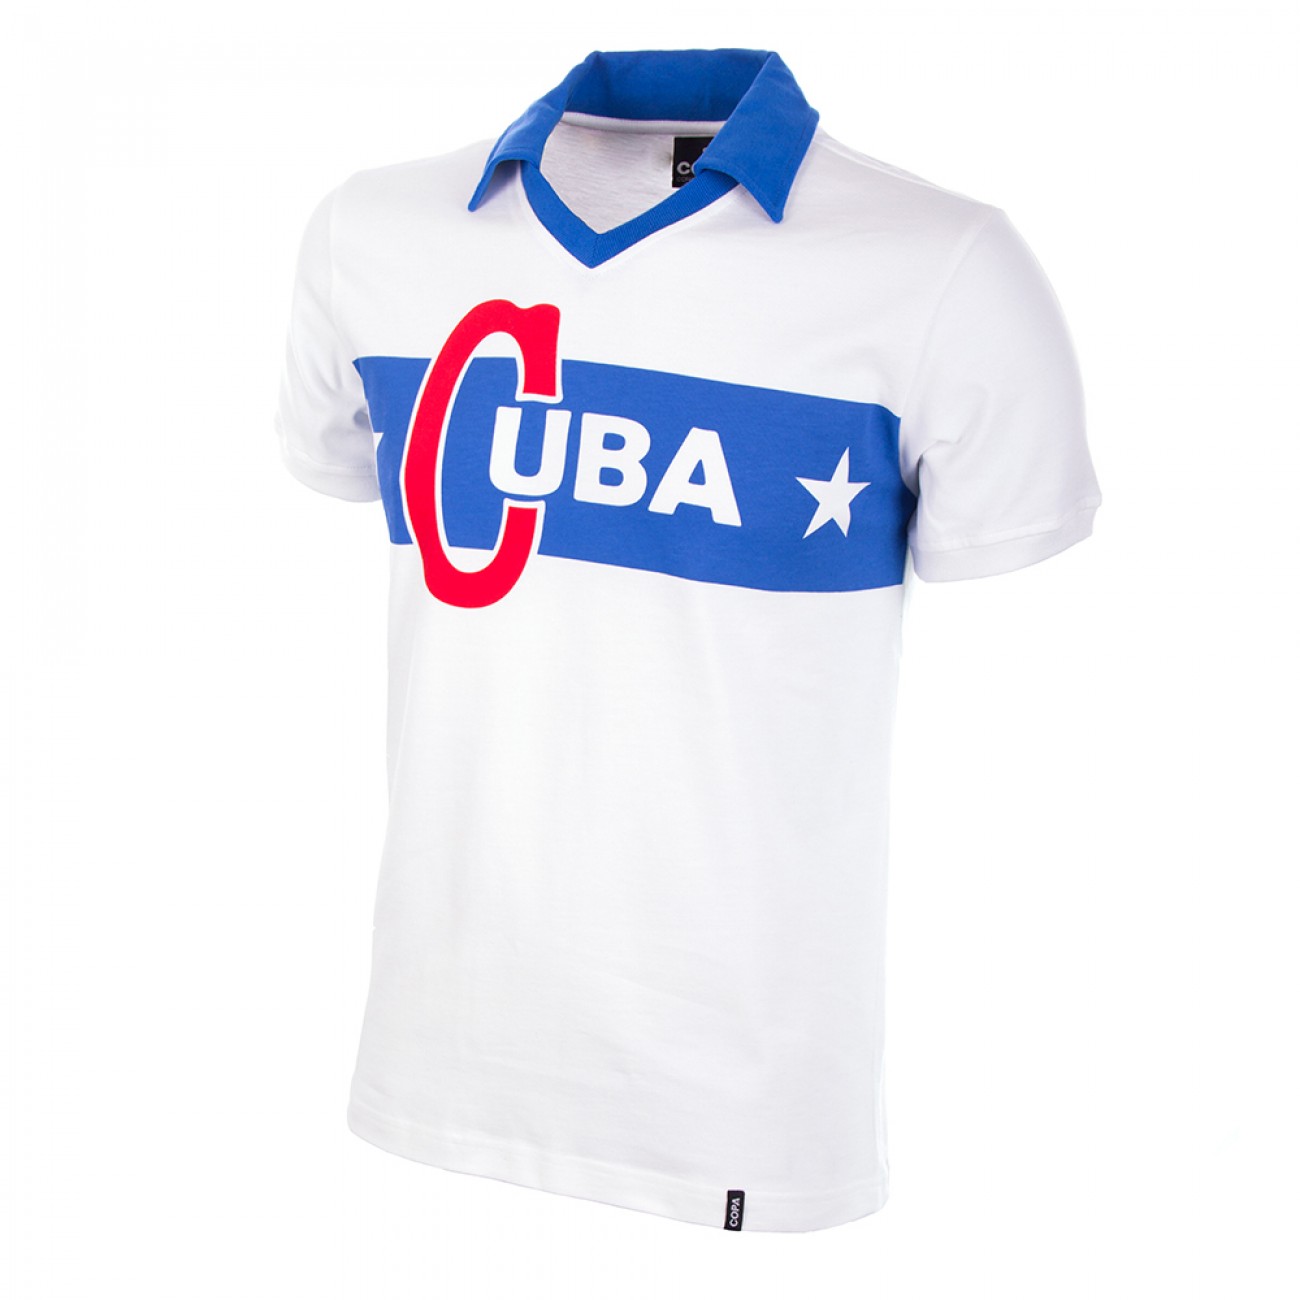 http://www.retrofootball.es/ropa-de-futbol/camiseta-cuba-1962-castro.html